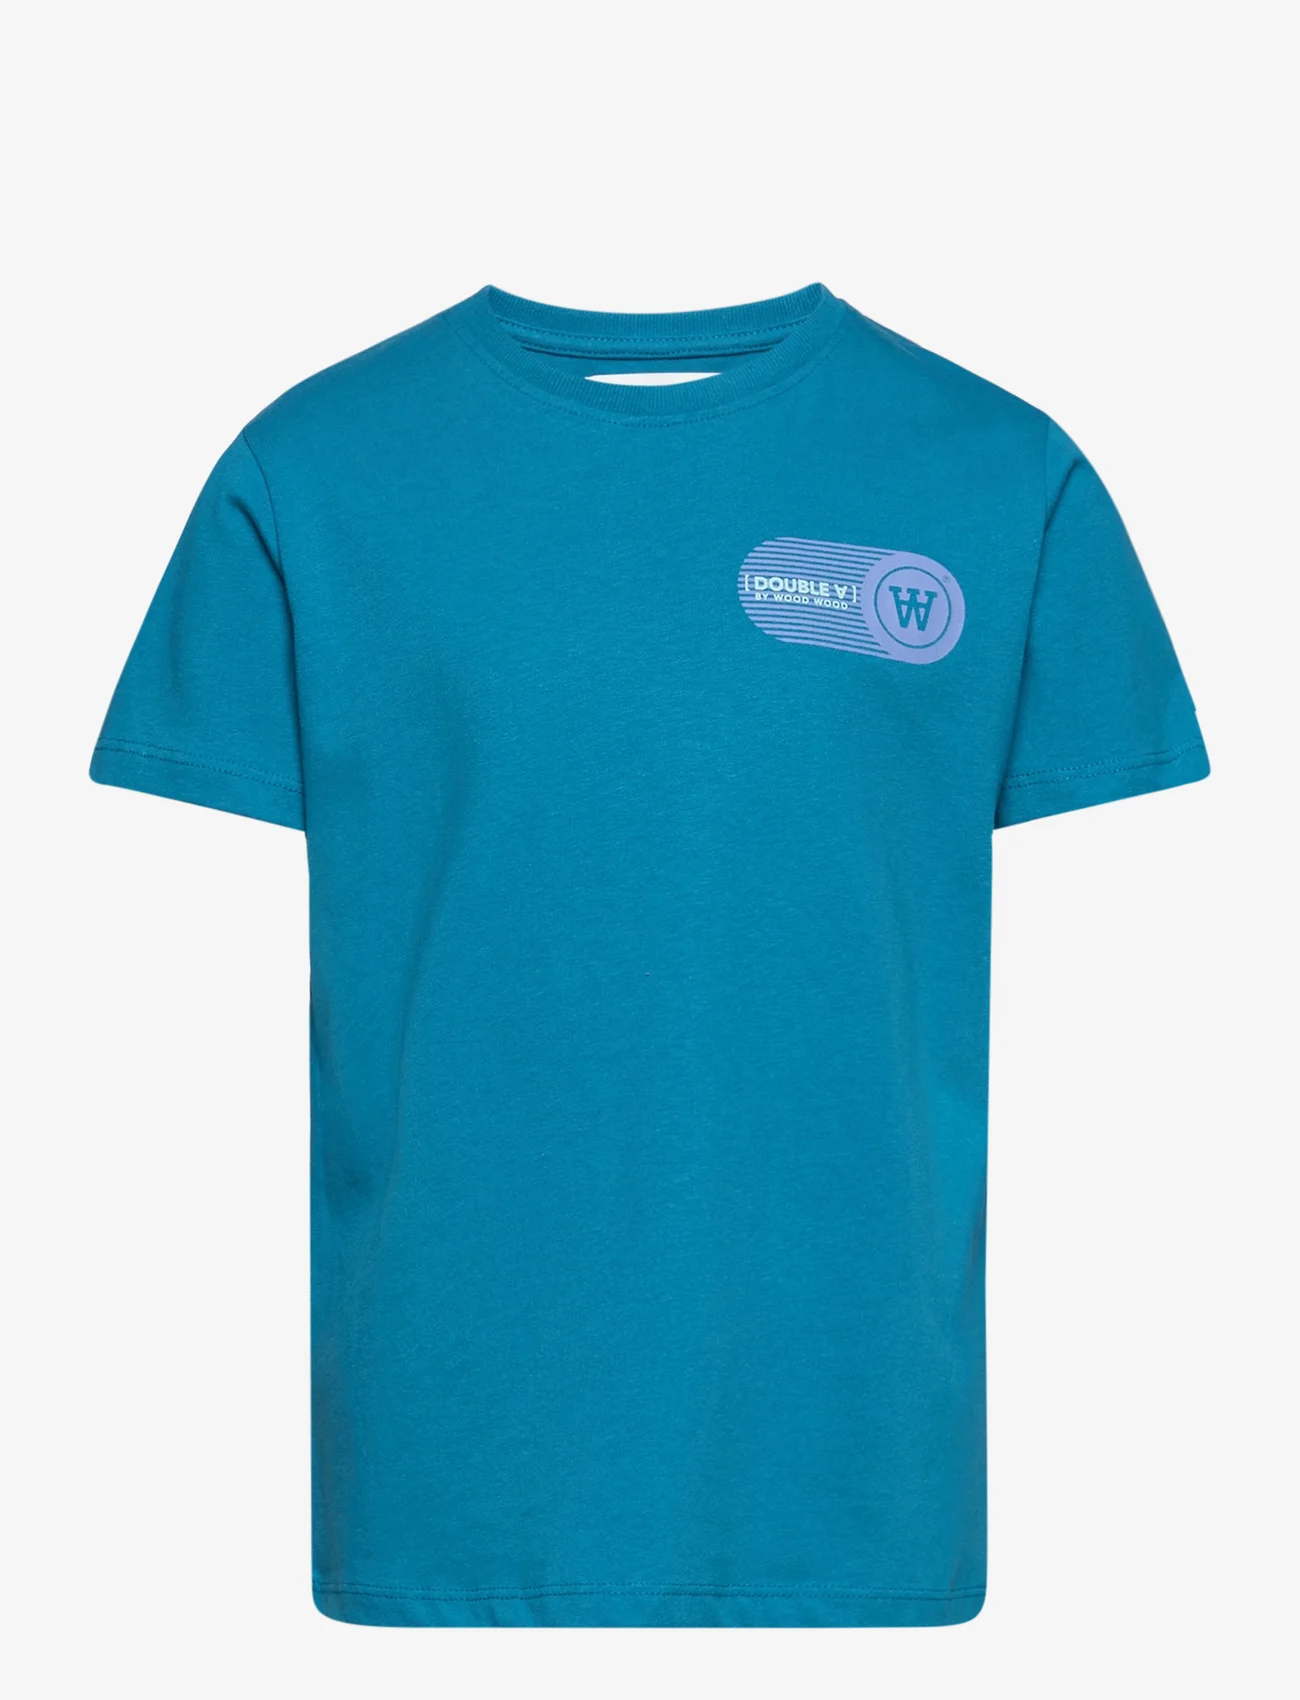 Wood Wood - Ola kids print T-shirt - kurzärmelige - blue - 0